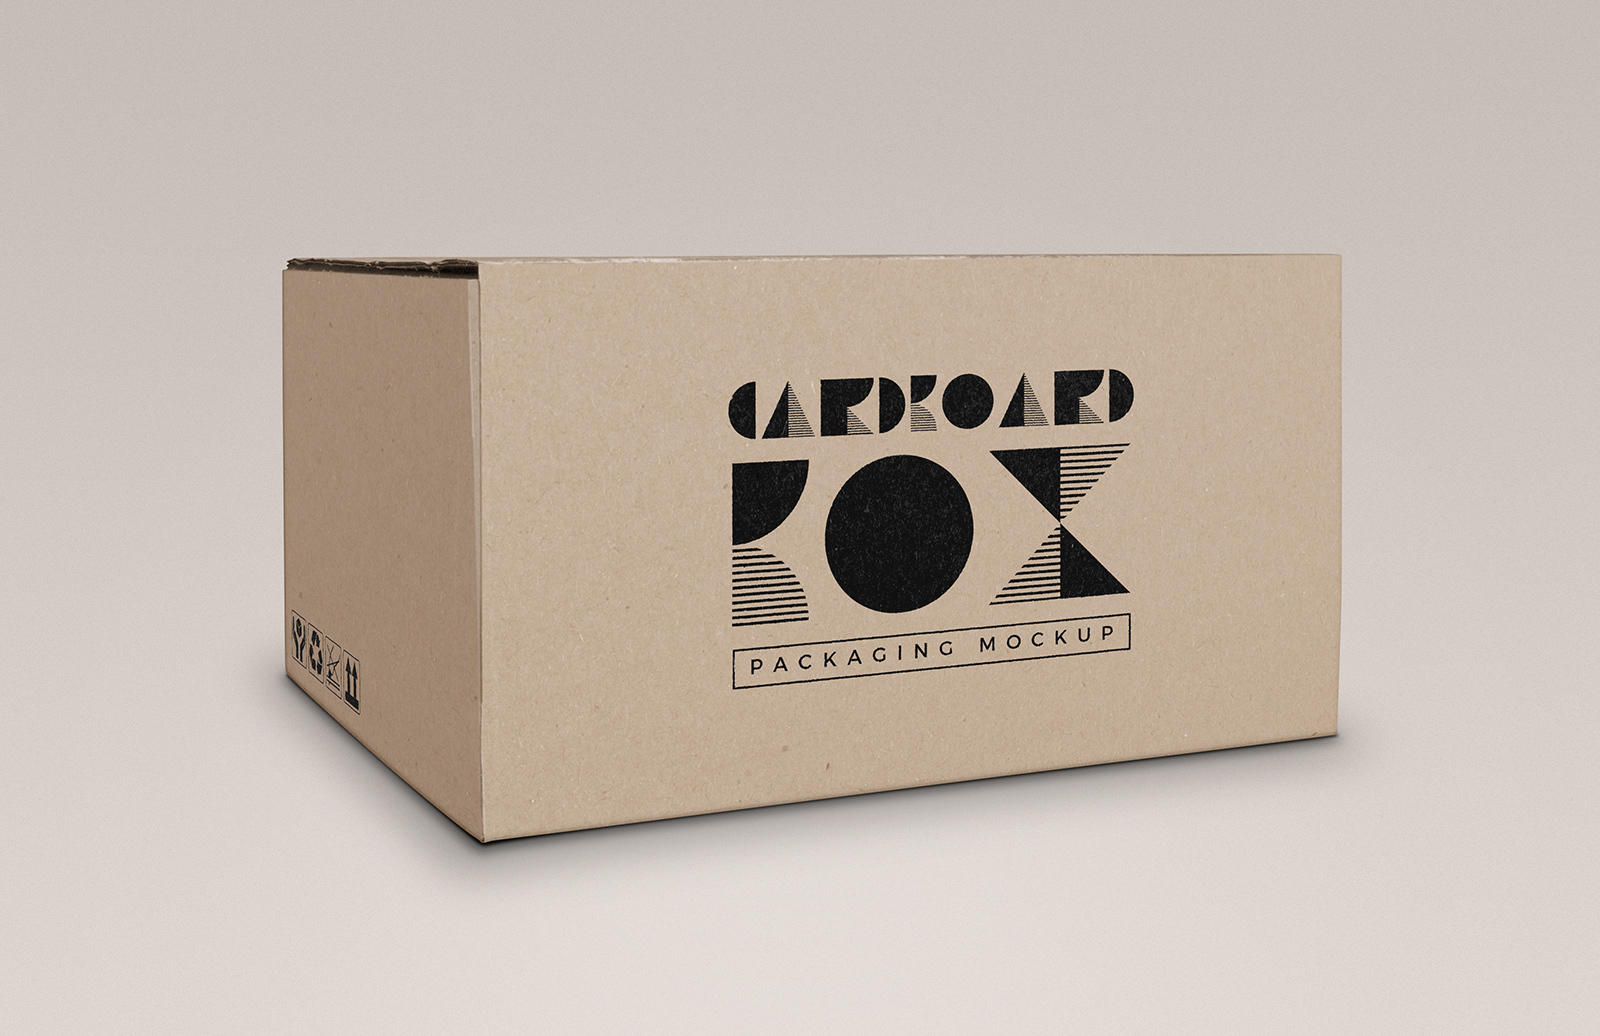 Download Cardboard Box Packaging Mockup Medialoot PSD Mockup Templates